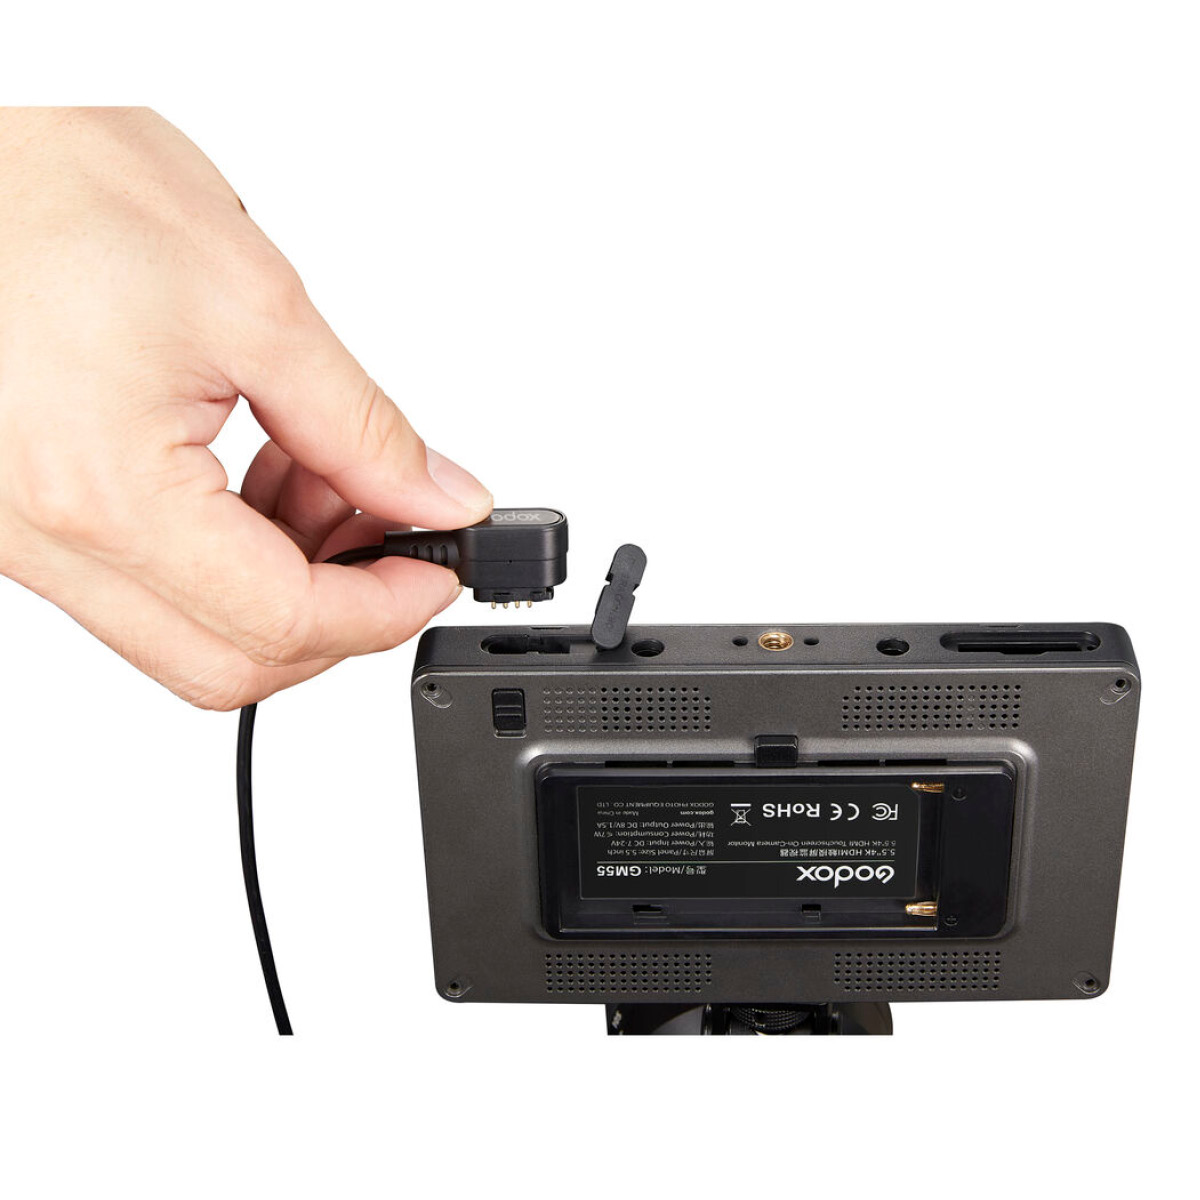 Godox GMC-U2 Camera Control Cable Mini USB